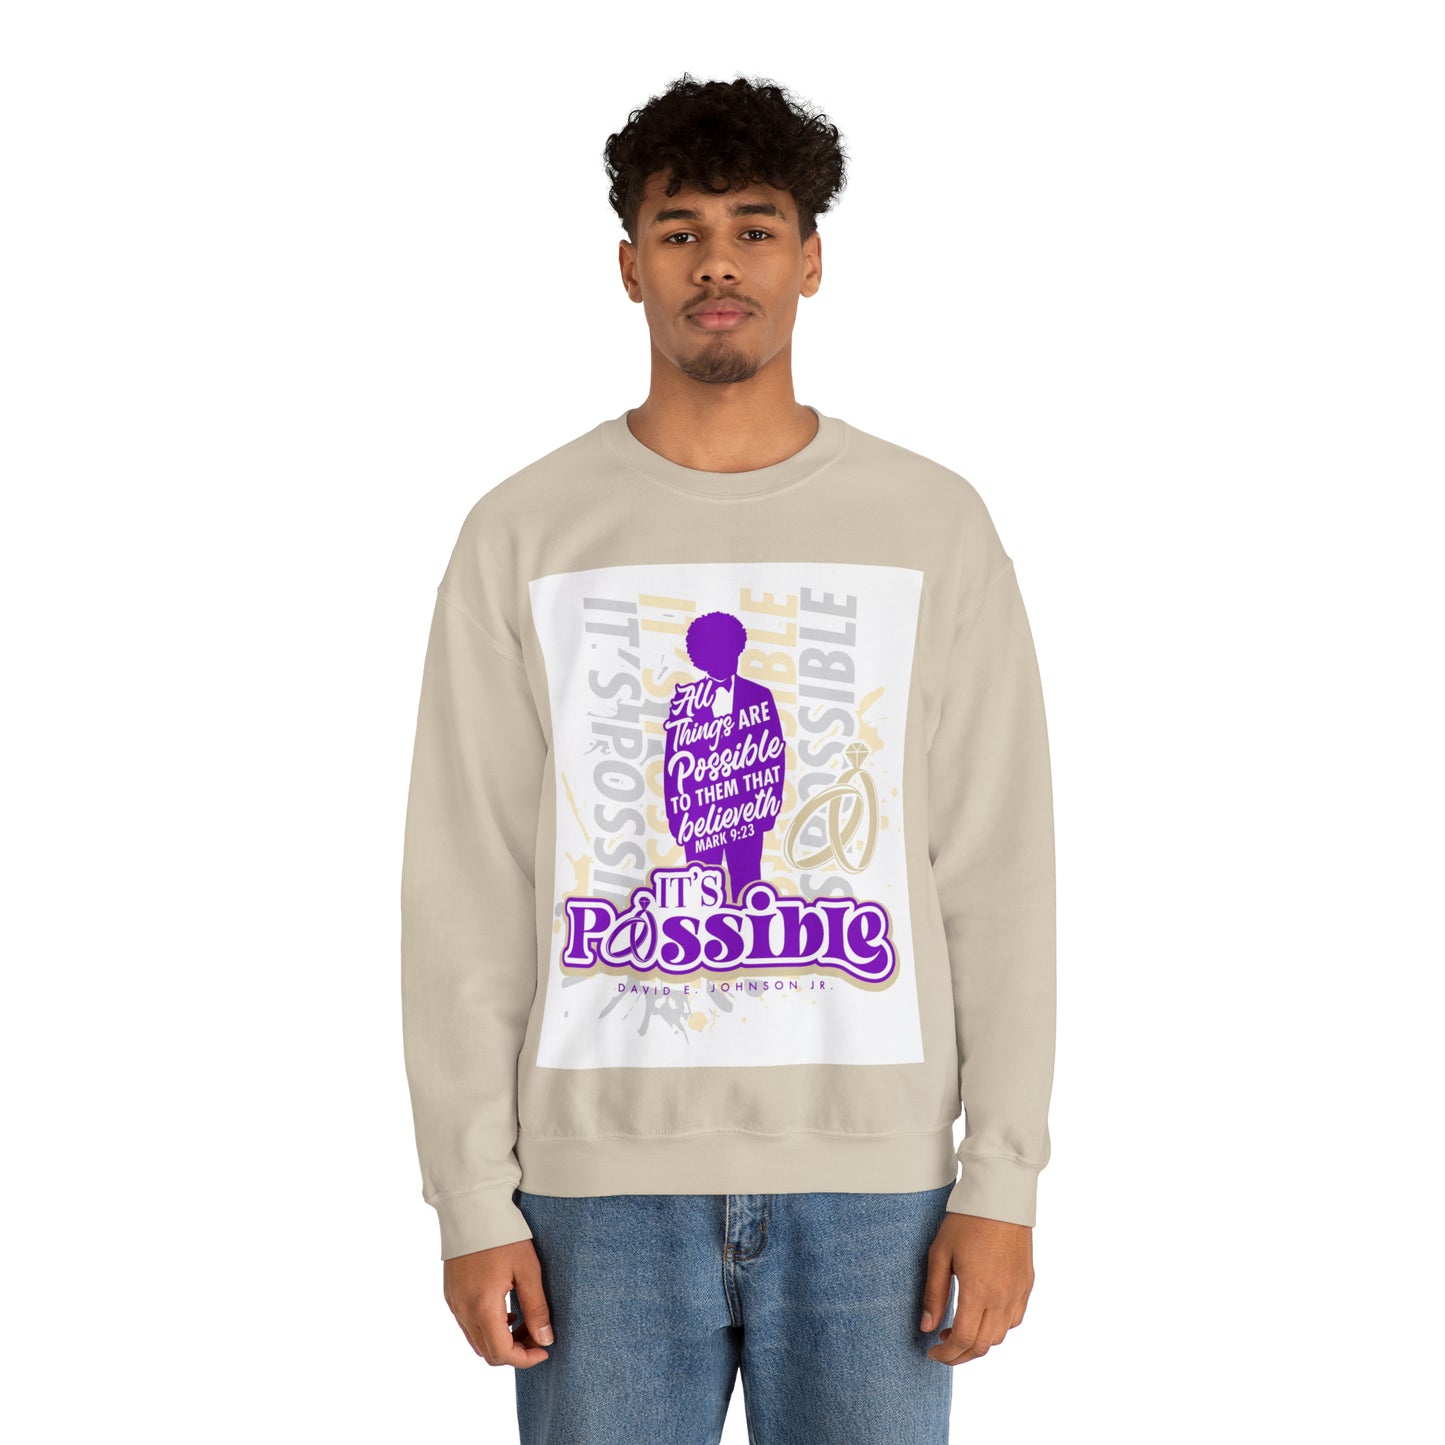 "It's Possible" Single Unisex Heavy Blend™ Crewneck Sweatshirt (Purple)